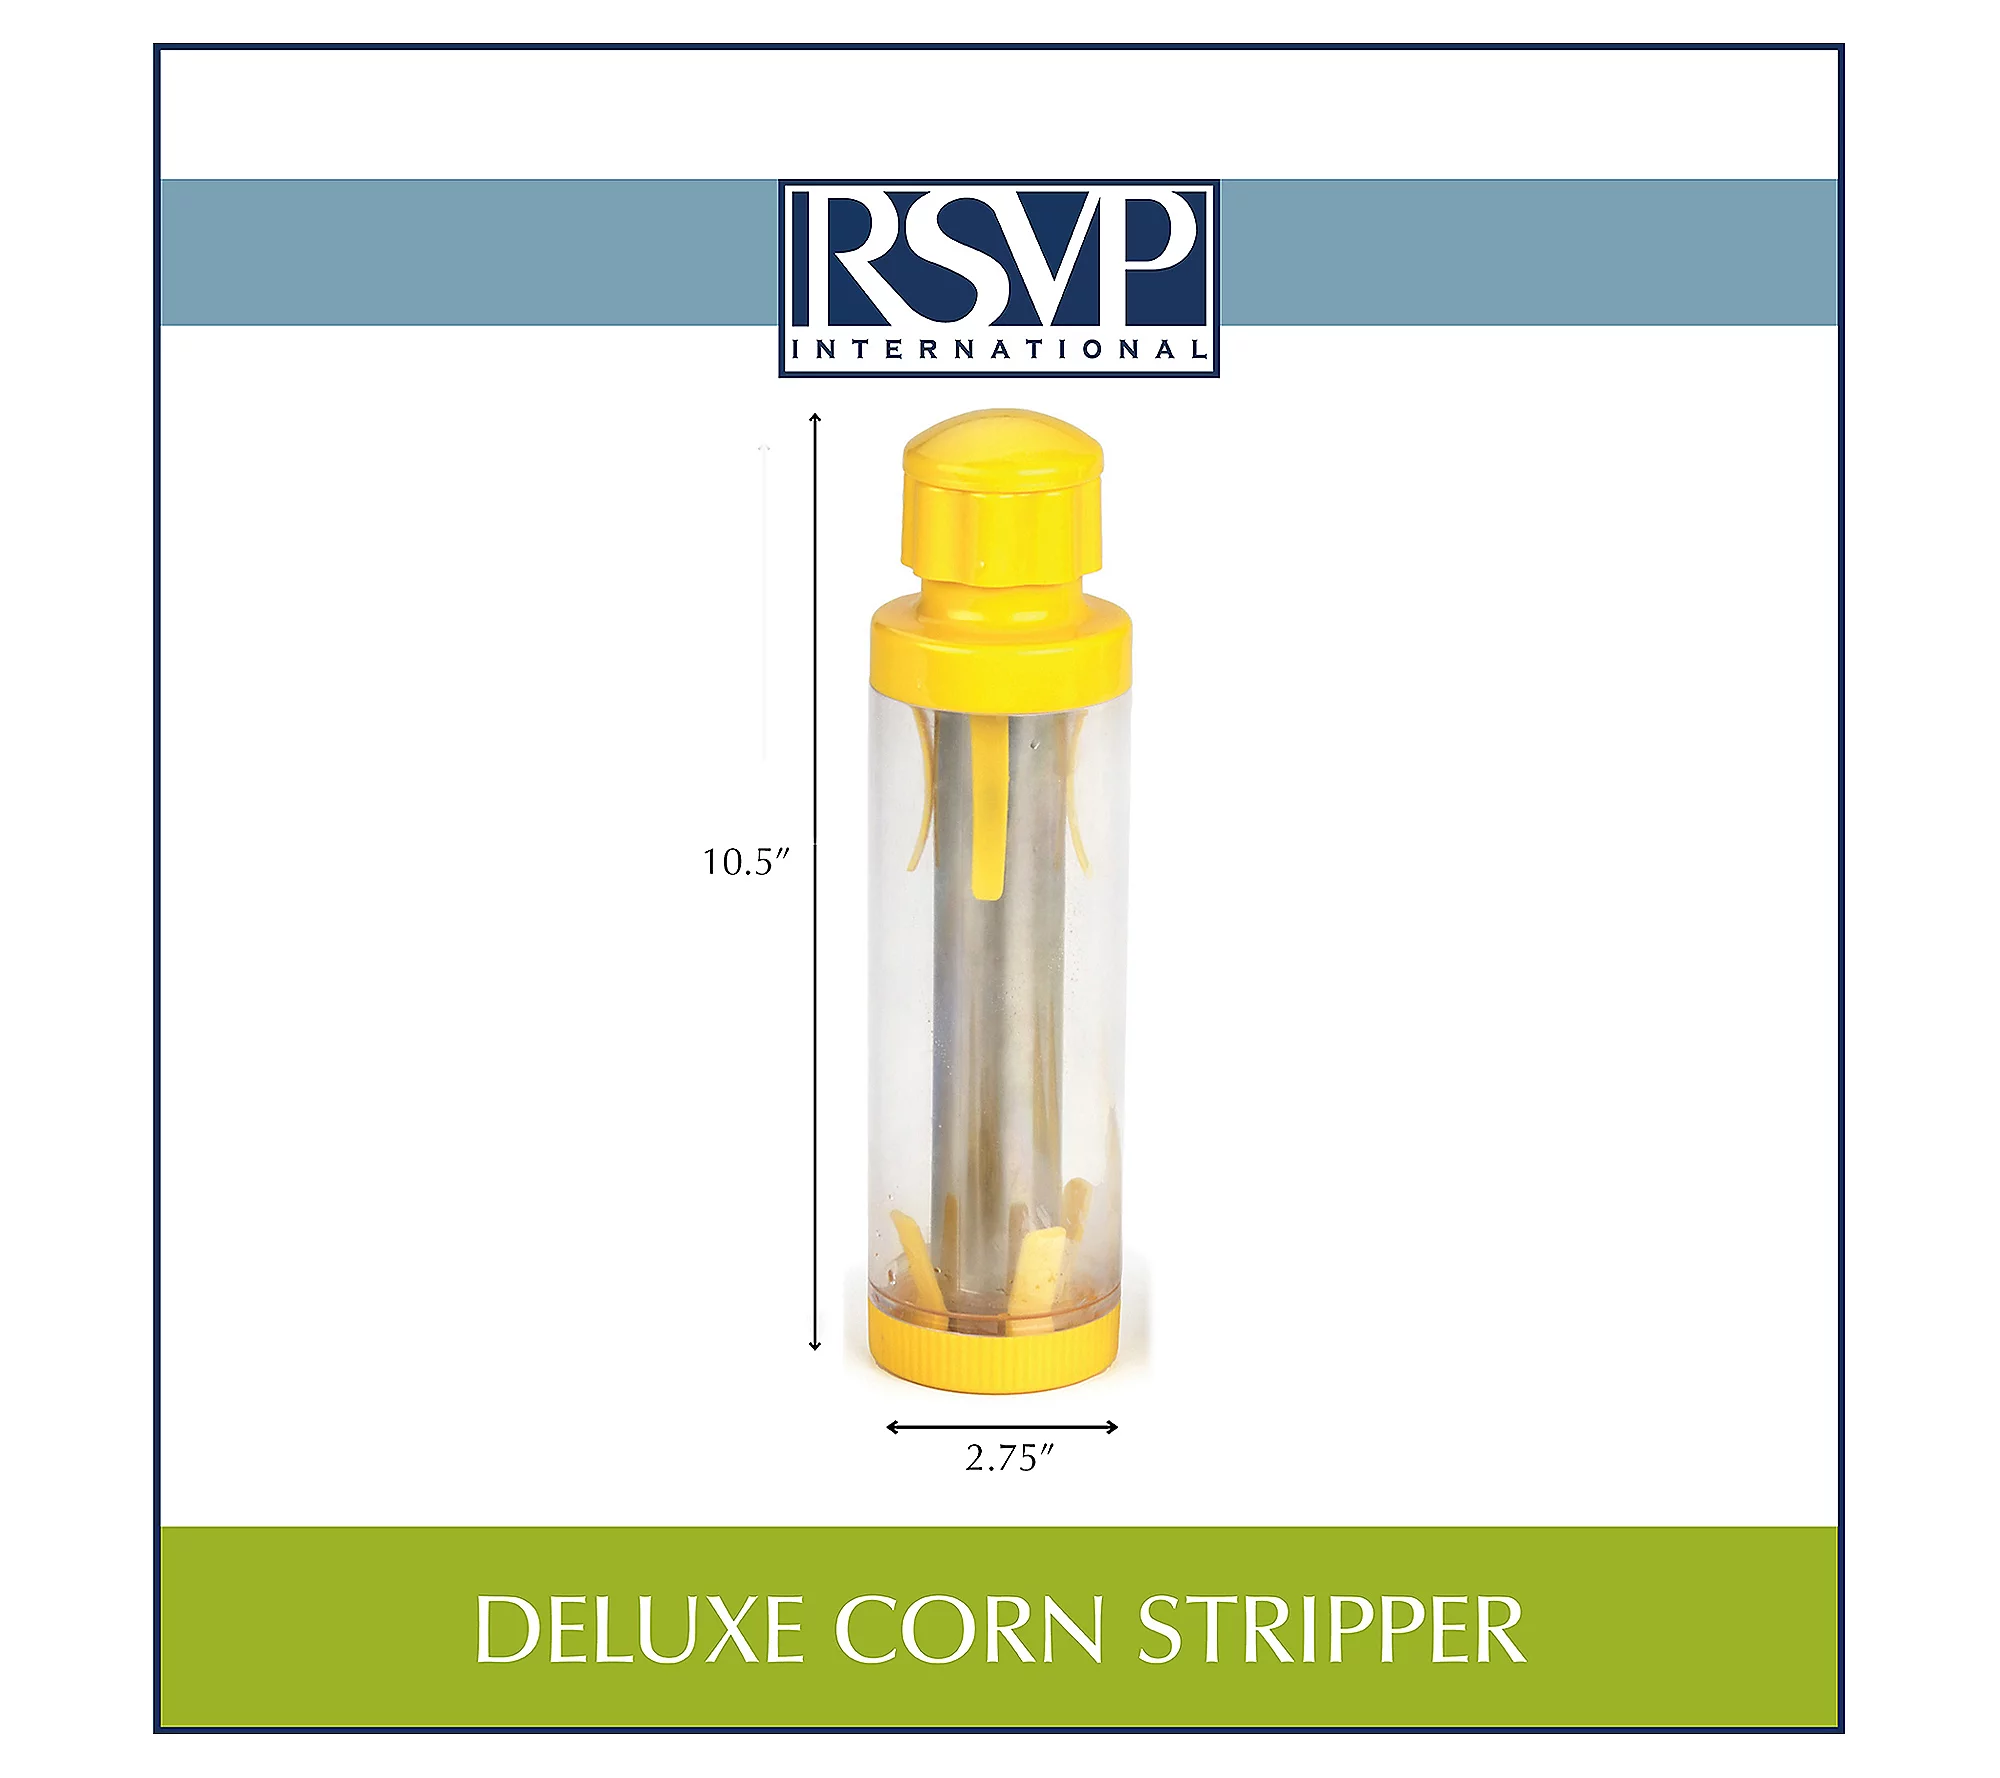 RSVP Deluxe Corn Stripper